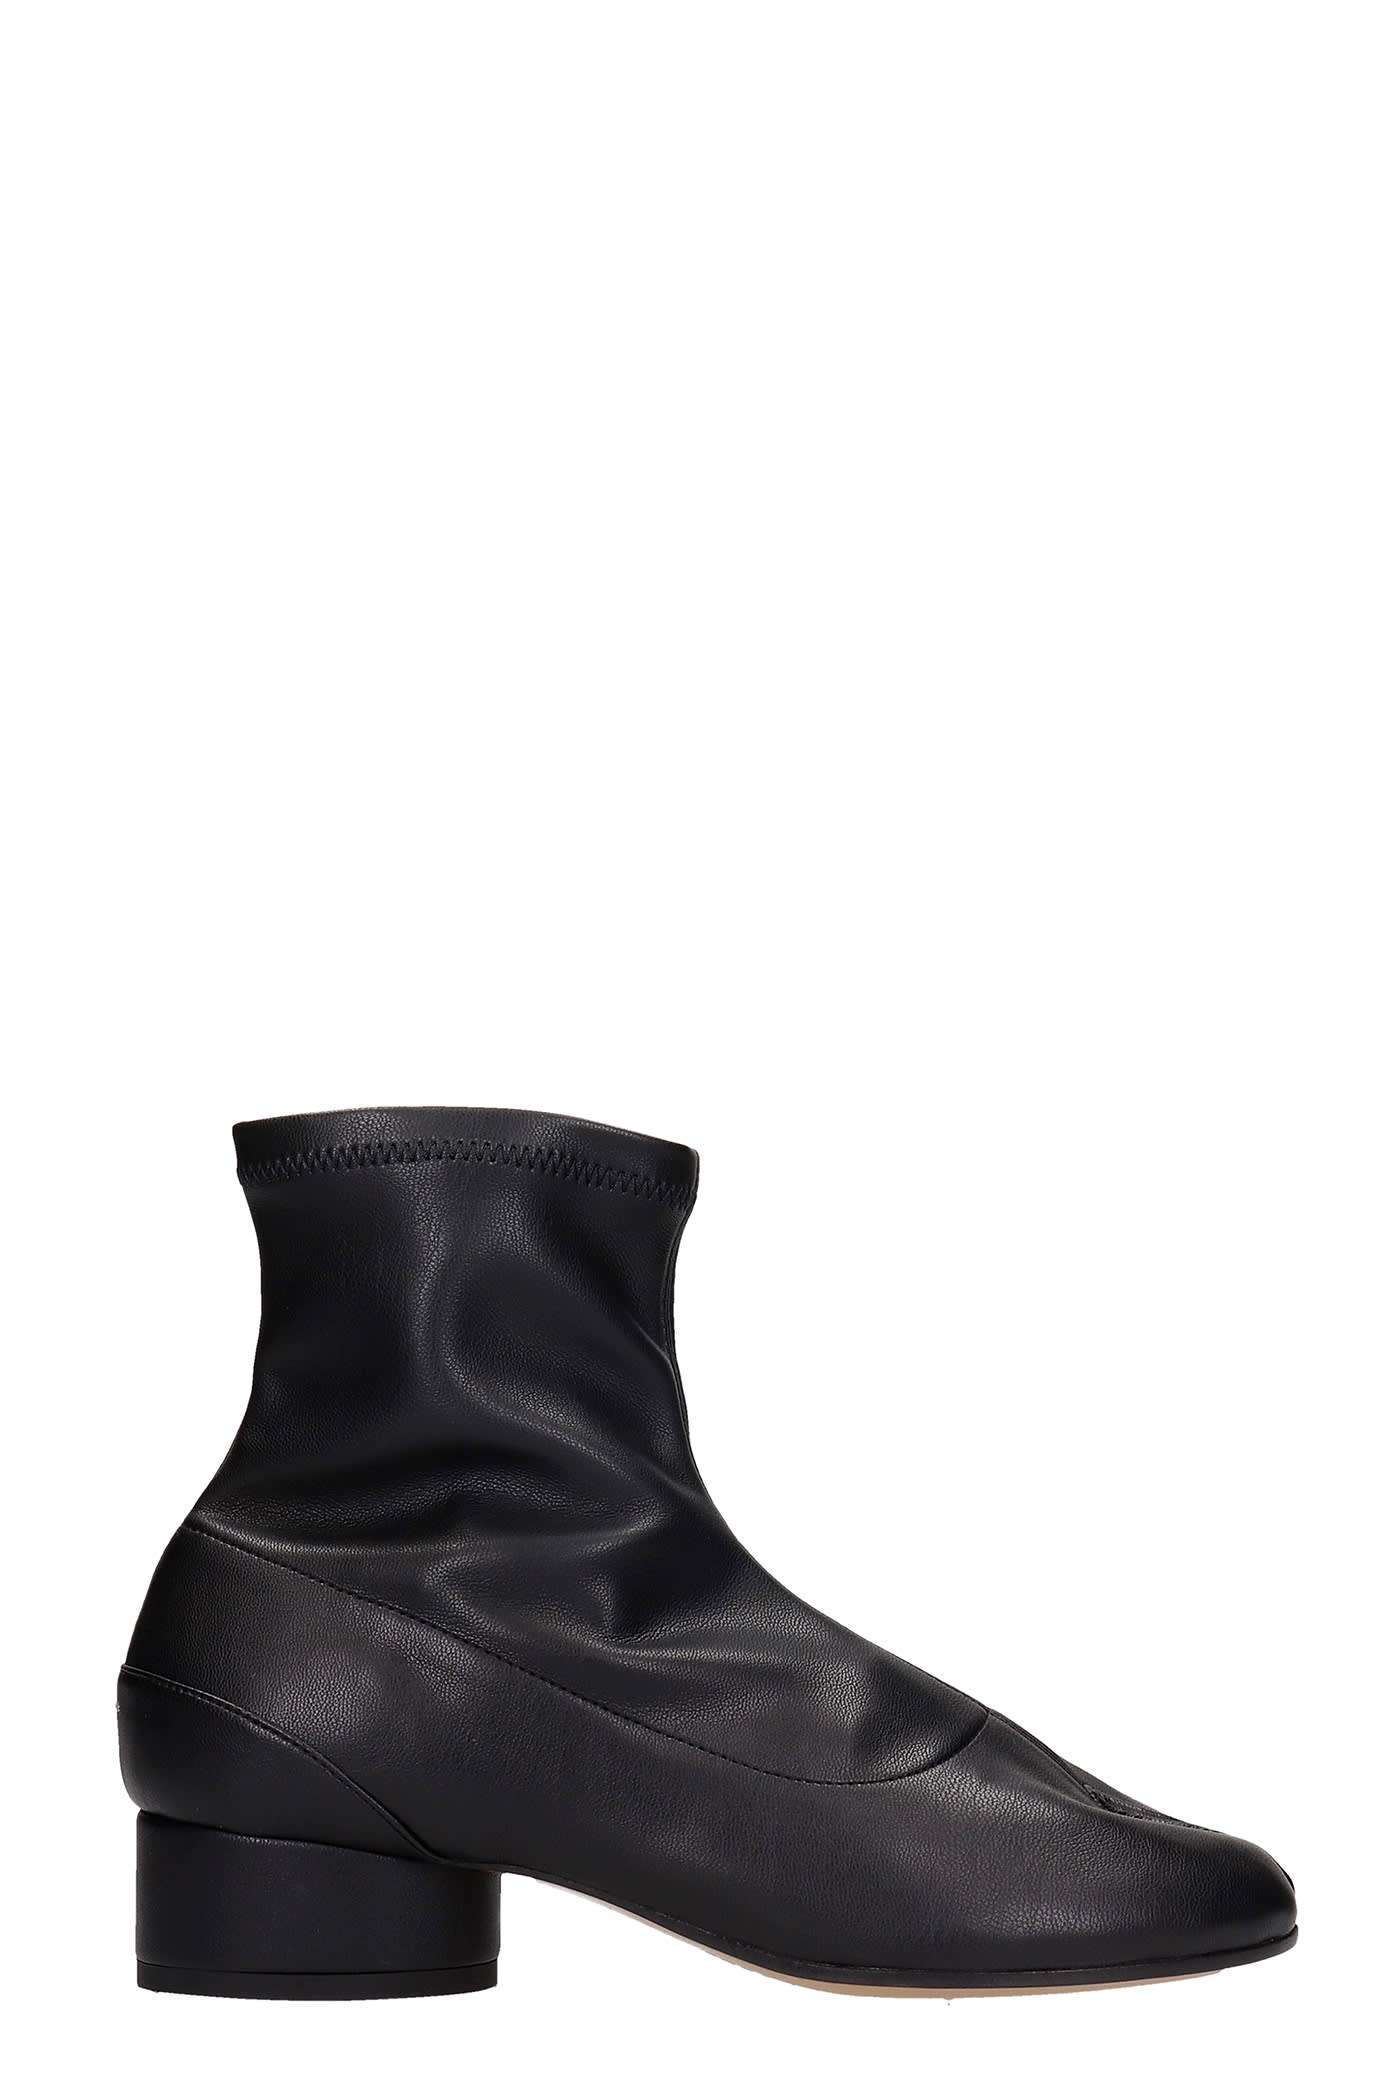 Maison Margiela Tabi Low Heels Ankle Boots In Black Leather